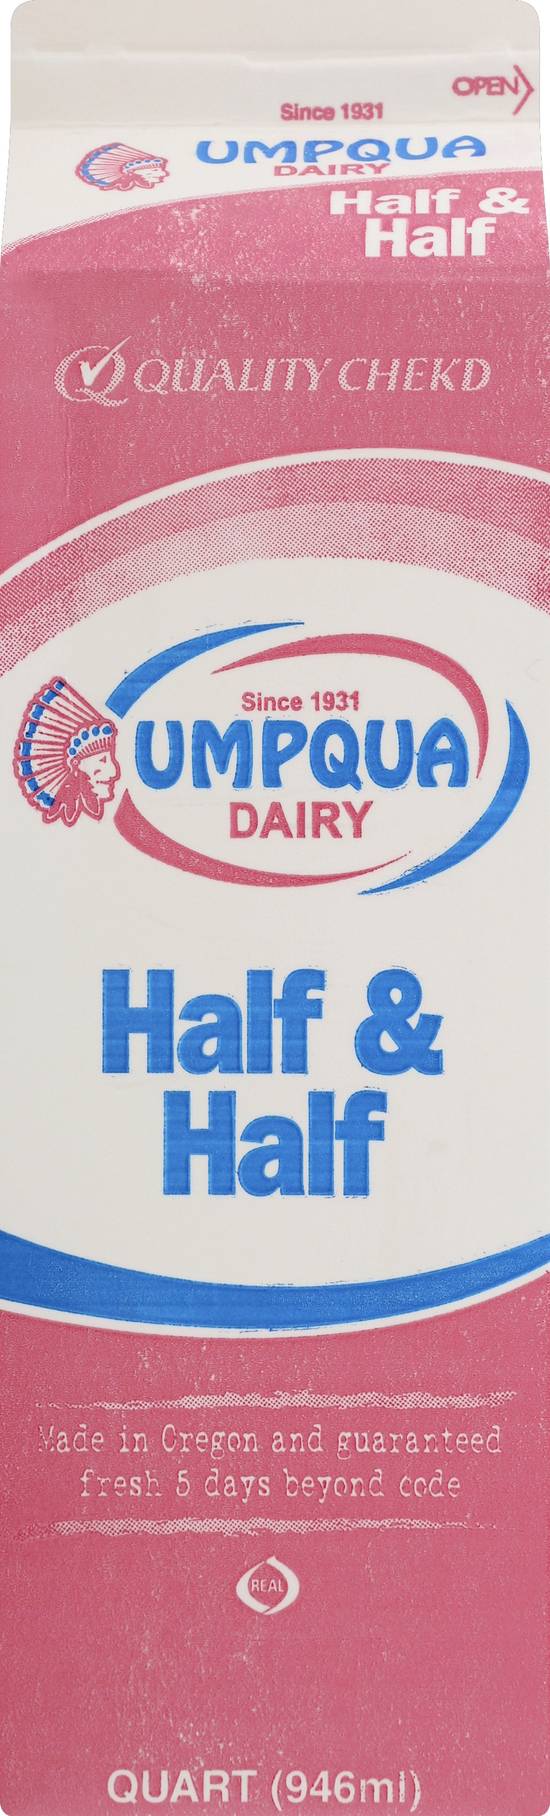 Umpqua Dairy Half & Half (1 quart)